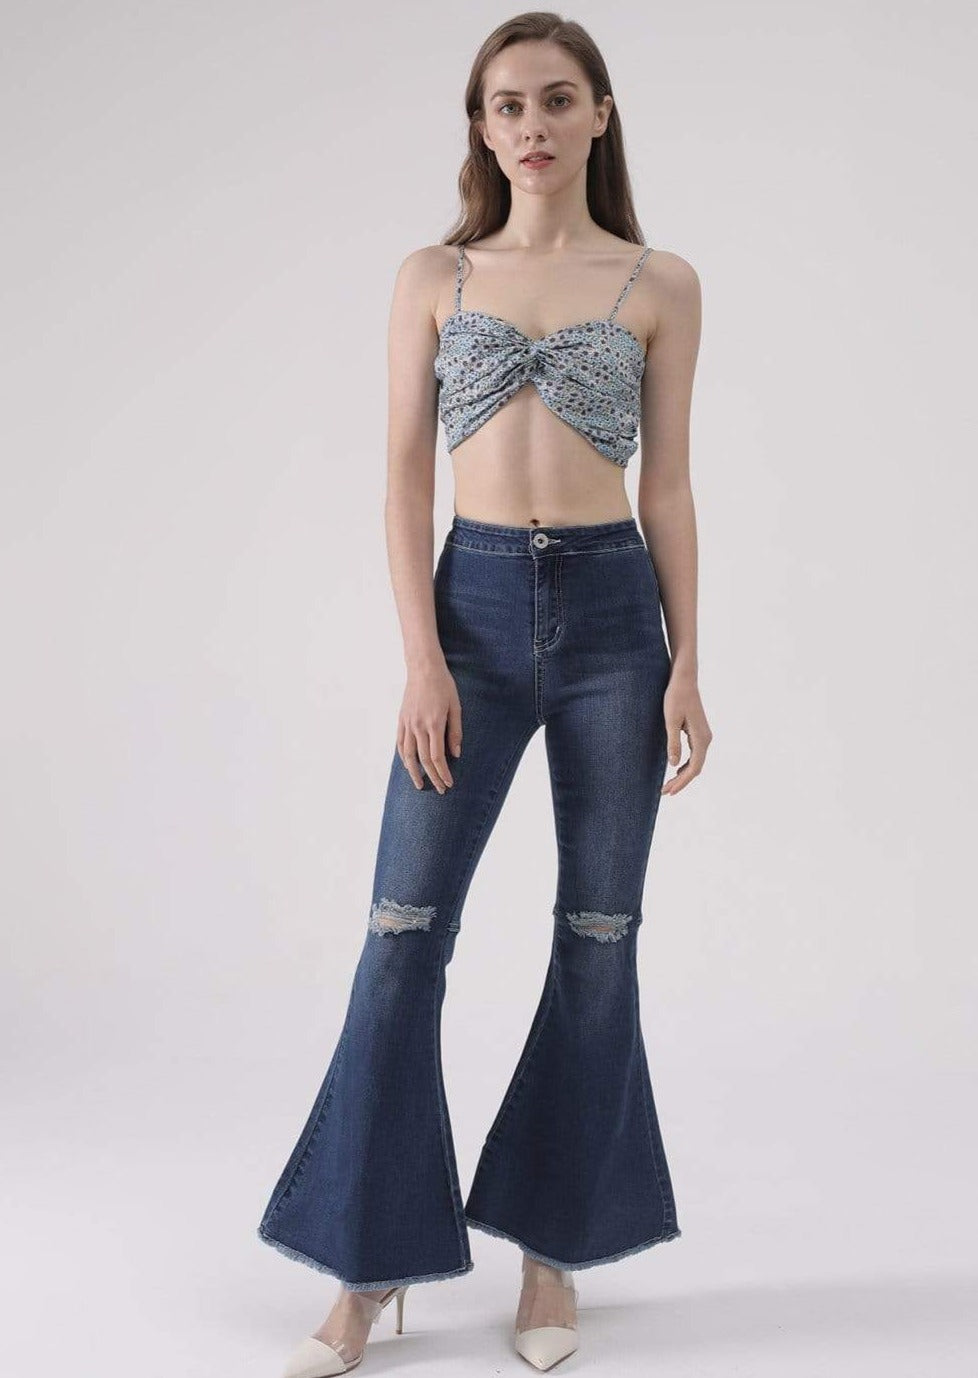 Women's Fashion Ripped High Waist Classic Denim Bell Bottom Jeans -  Anna-Kaci